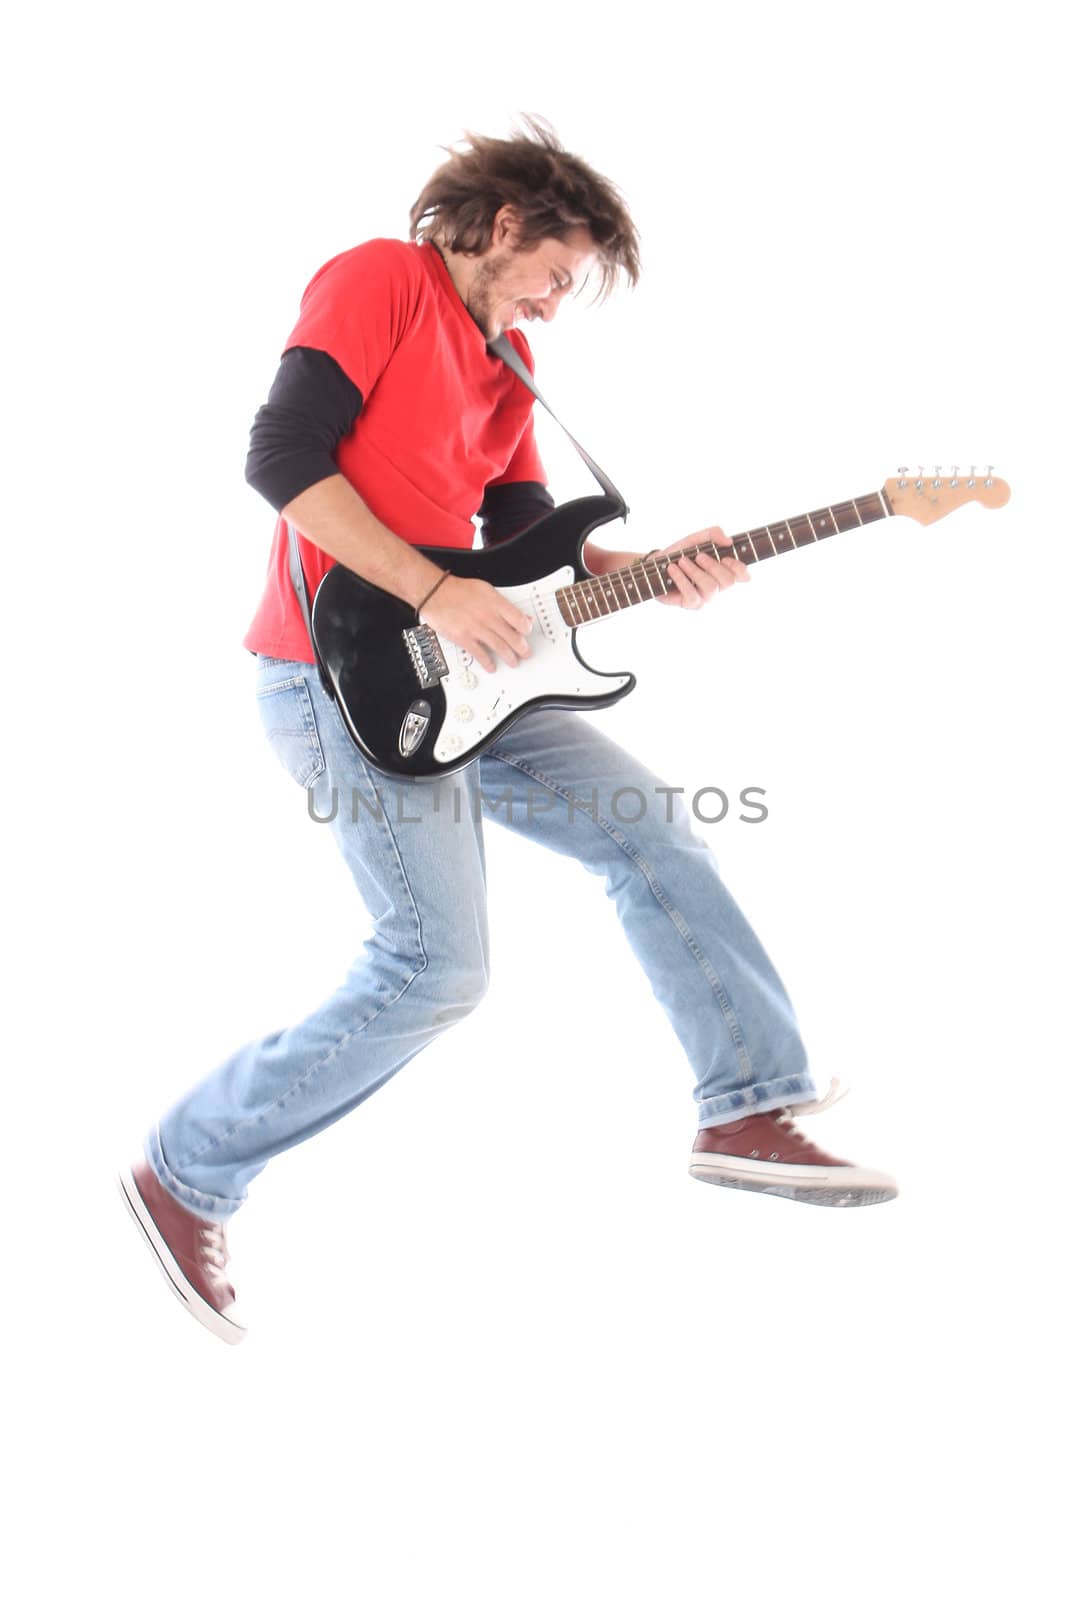 Guitar player flying by Erdosain